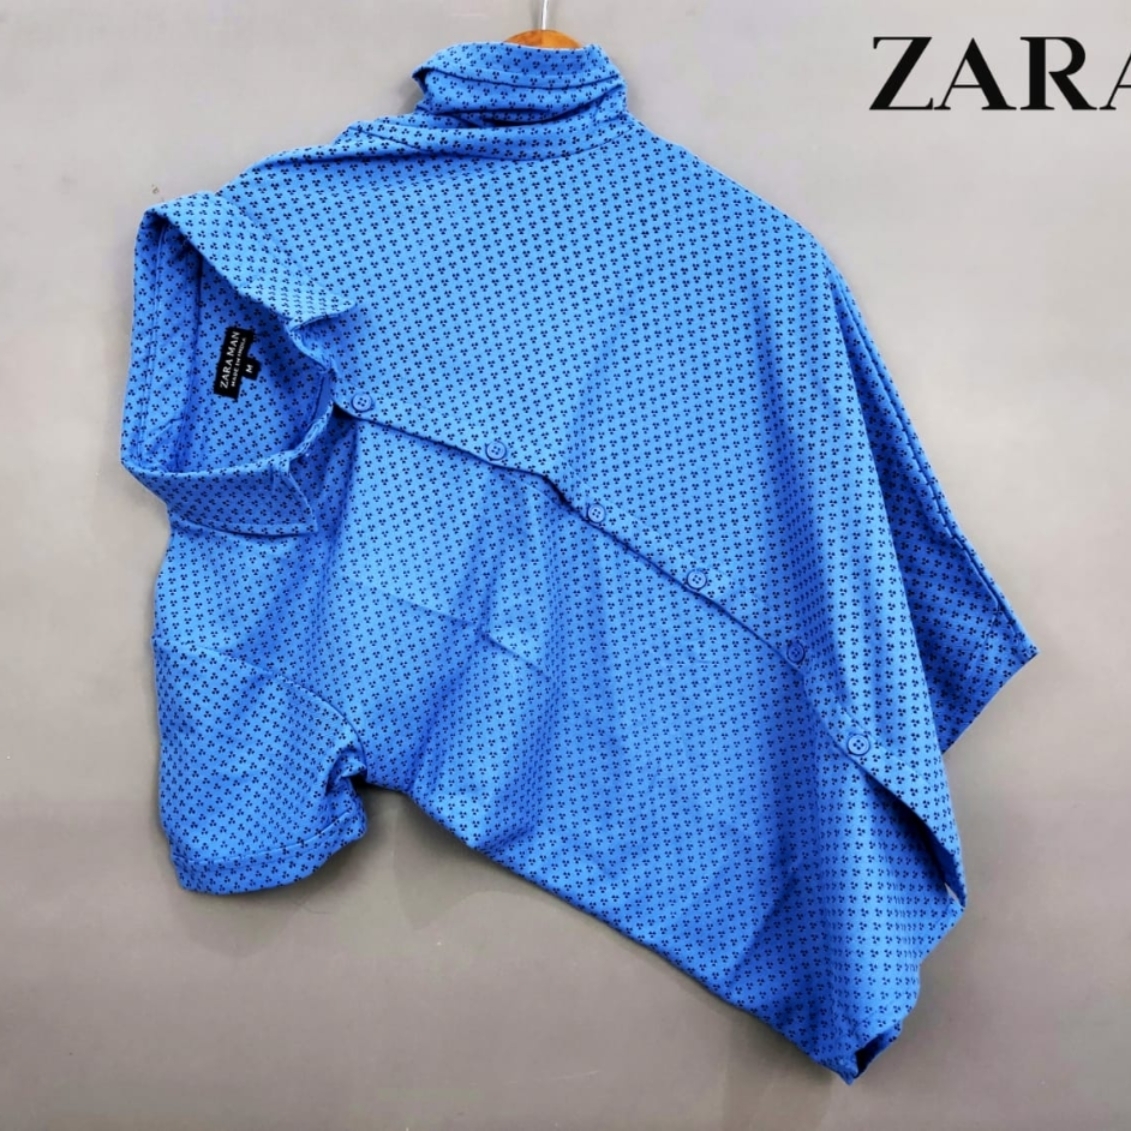 Zara front button tshirt super quality